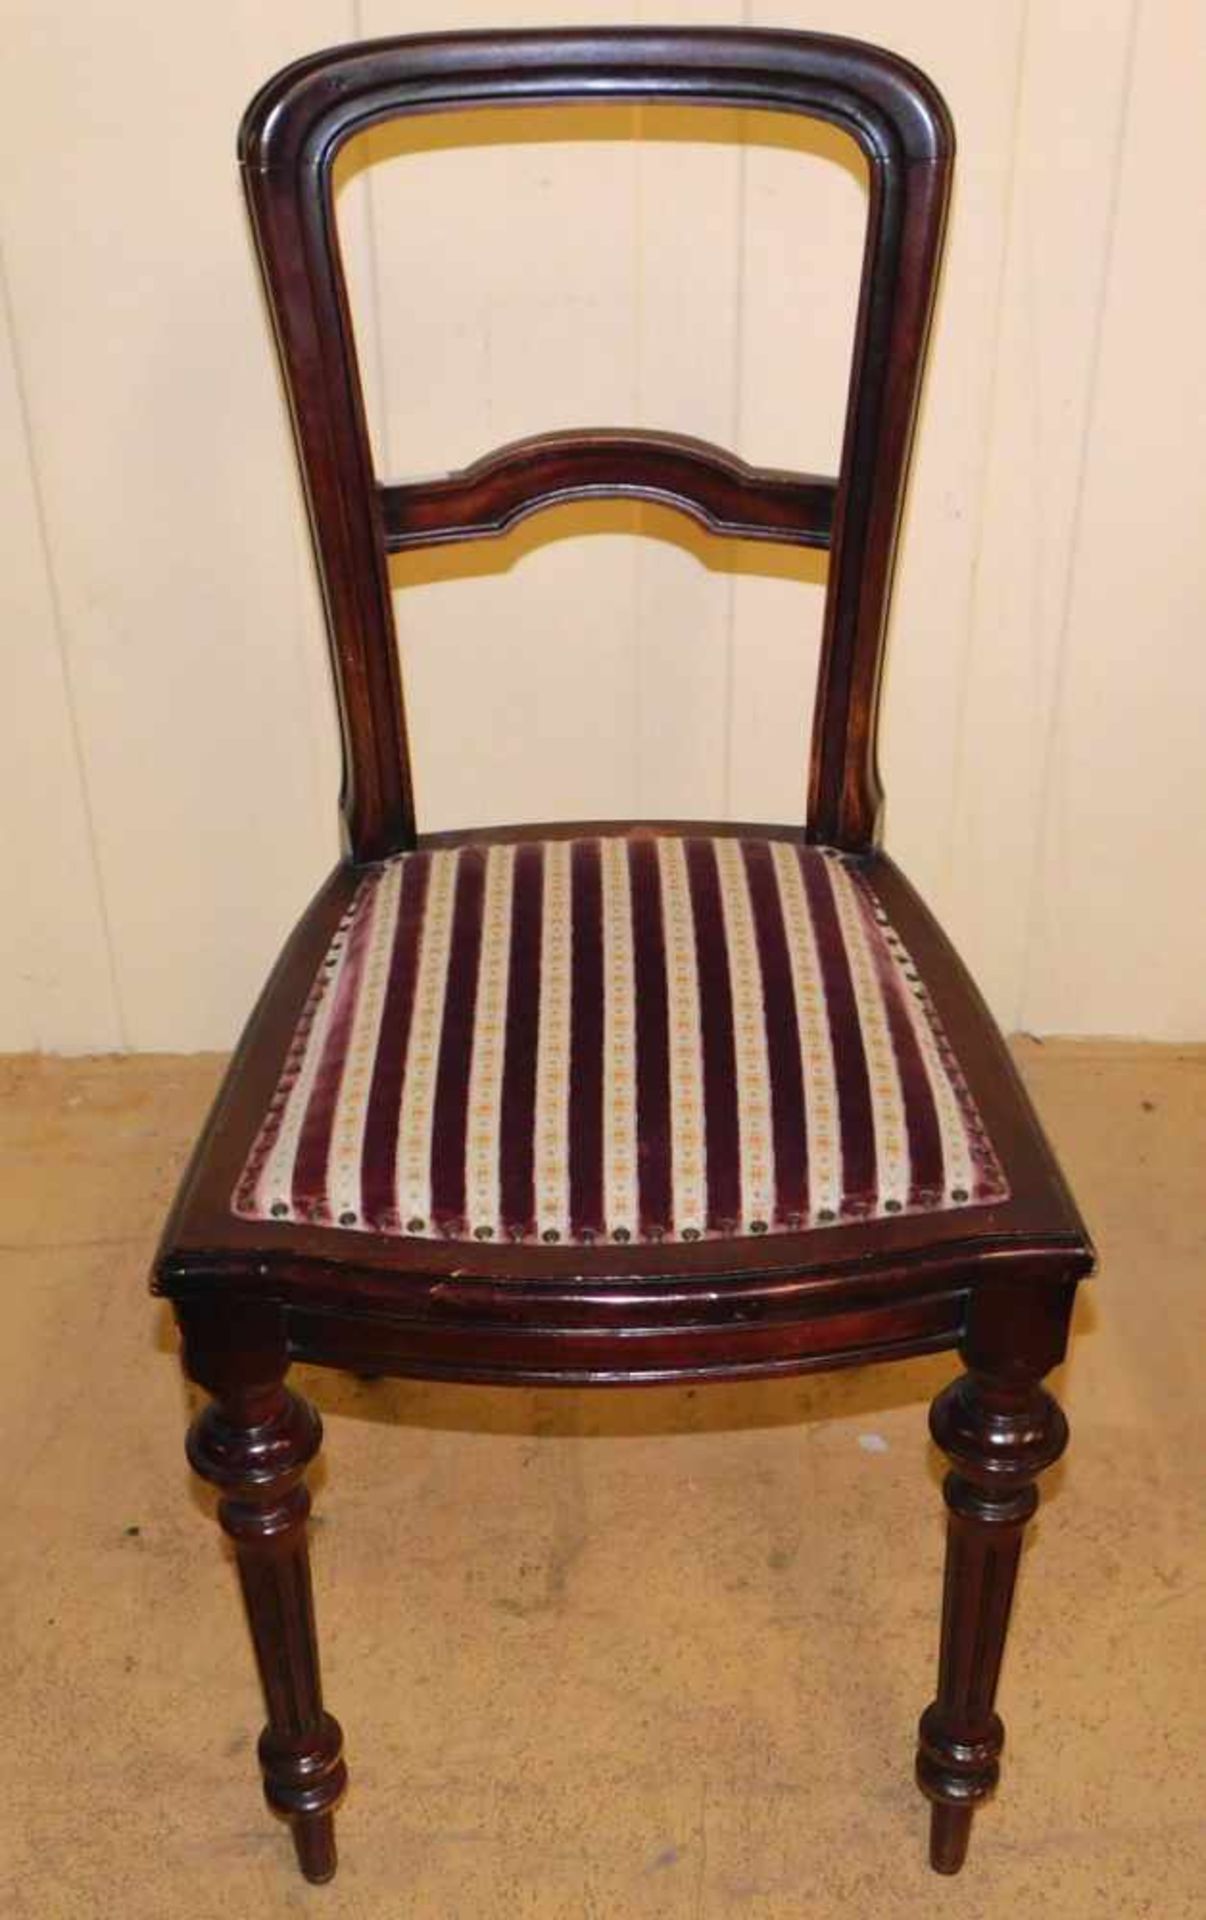 6 Stühle, Biedermeier um 1875, Mahagoni, Höhe 91 cm Breite 43 cm und Tiefe 45 cm - Image 2 of 2